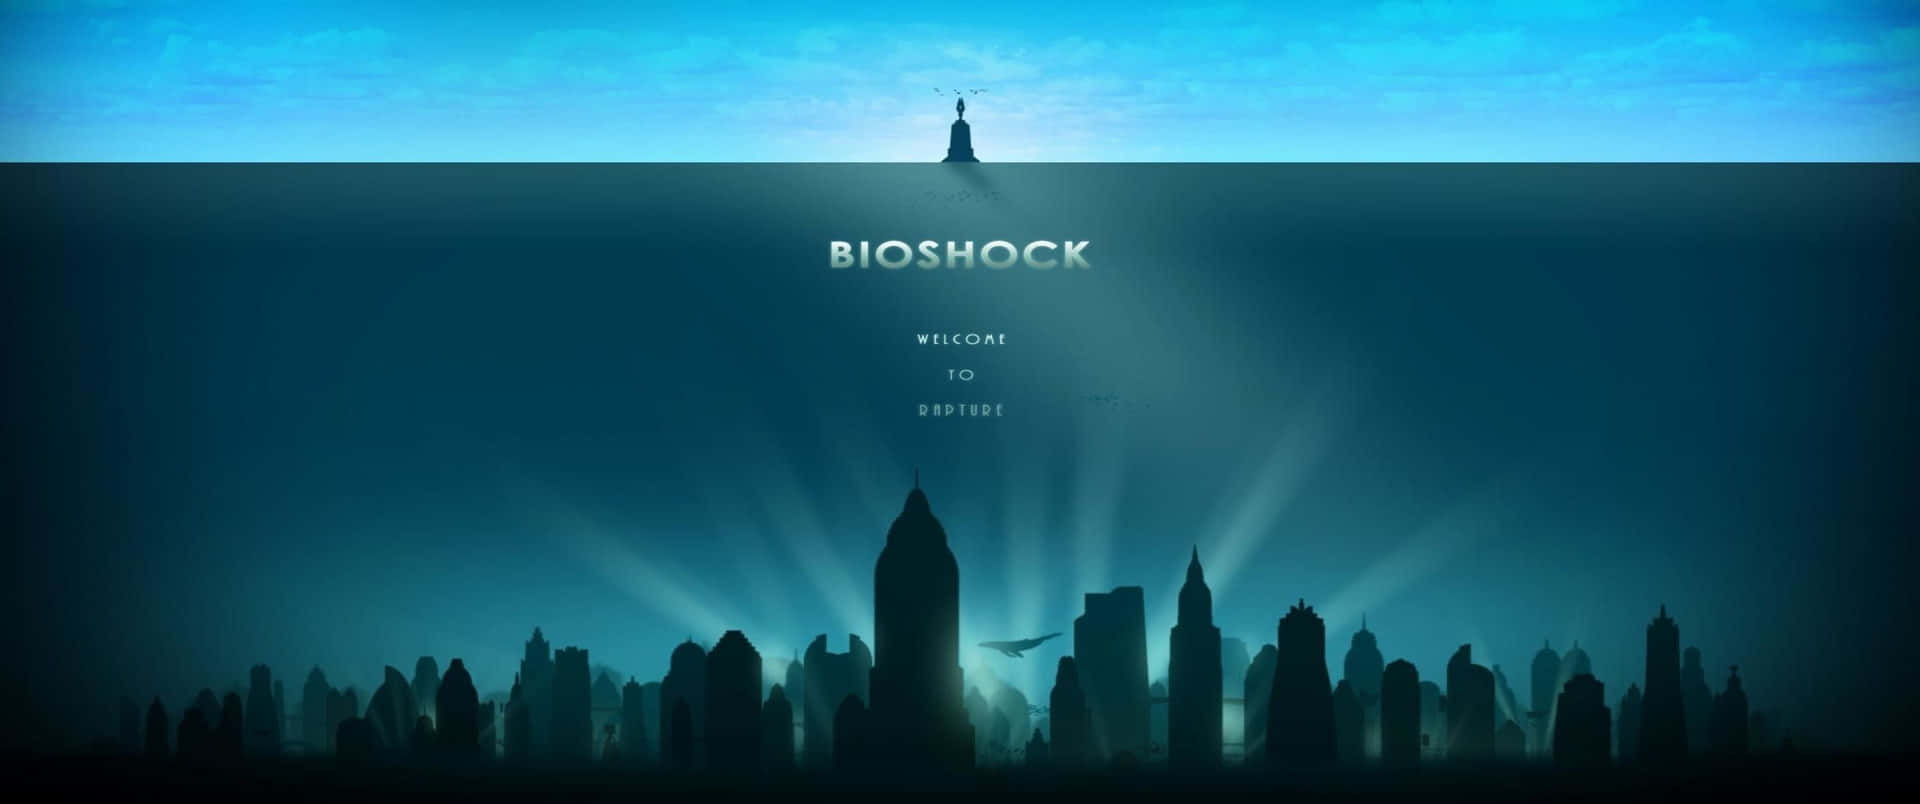 bioshock infinite silhouette